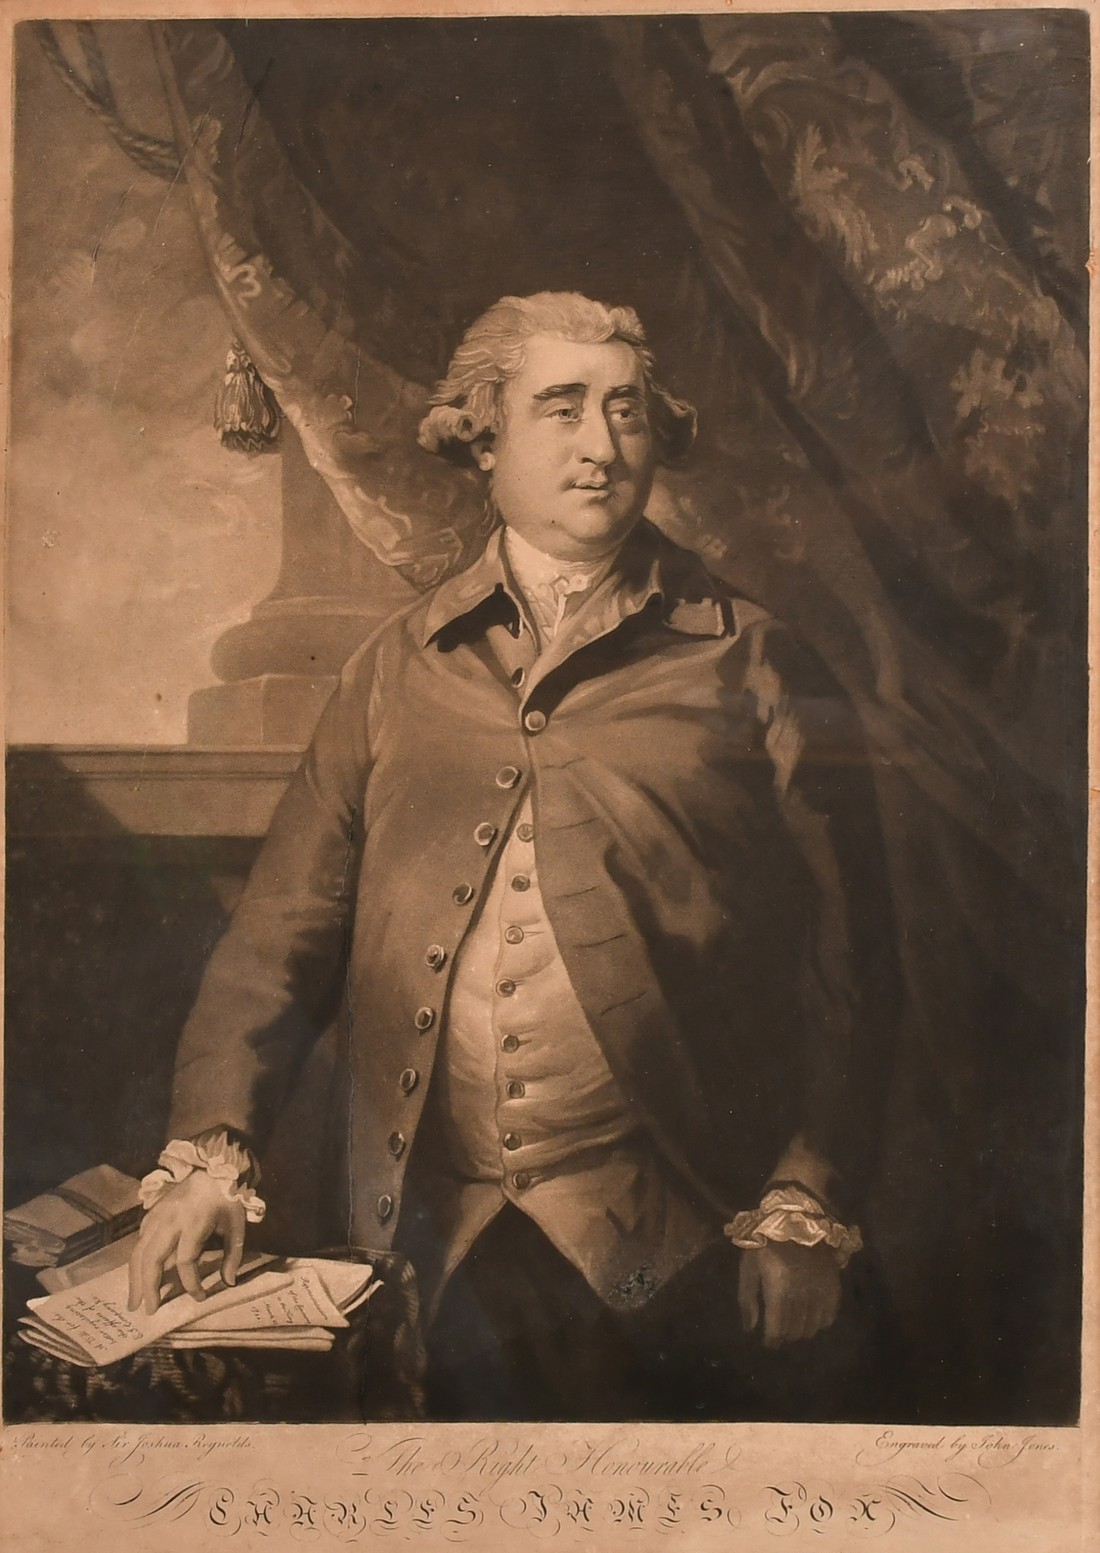 John Jones after Sir Joshua Reynolds, 'Charles James Fox', 18th Century mezzotint engraving, image